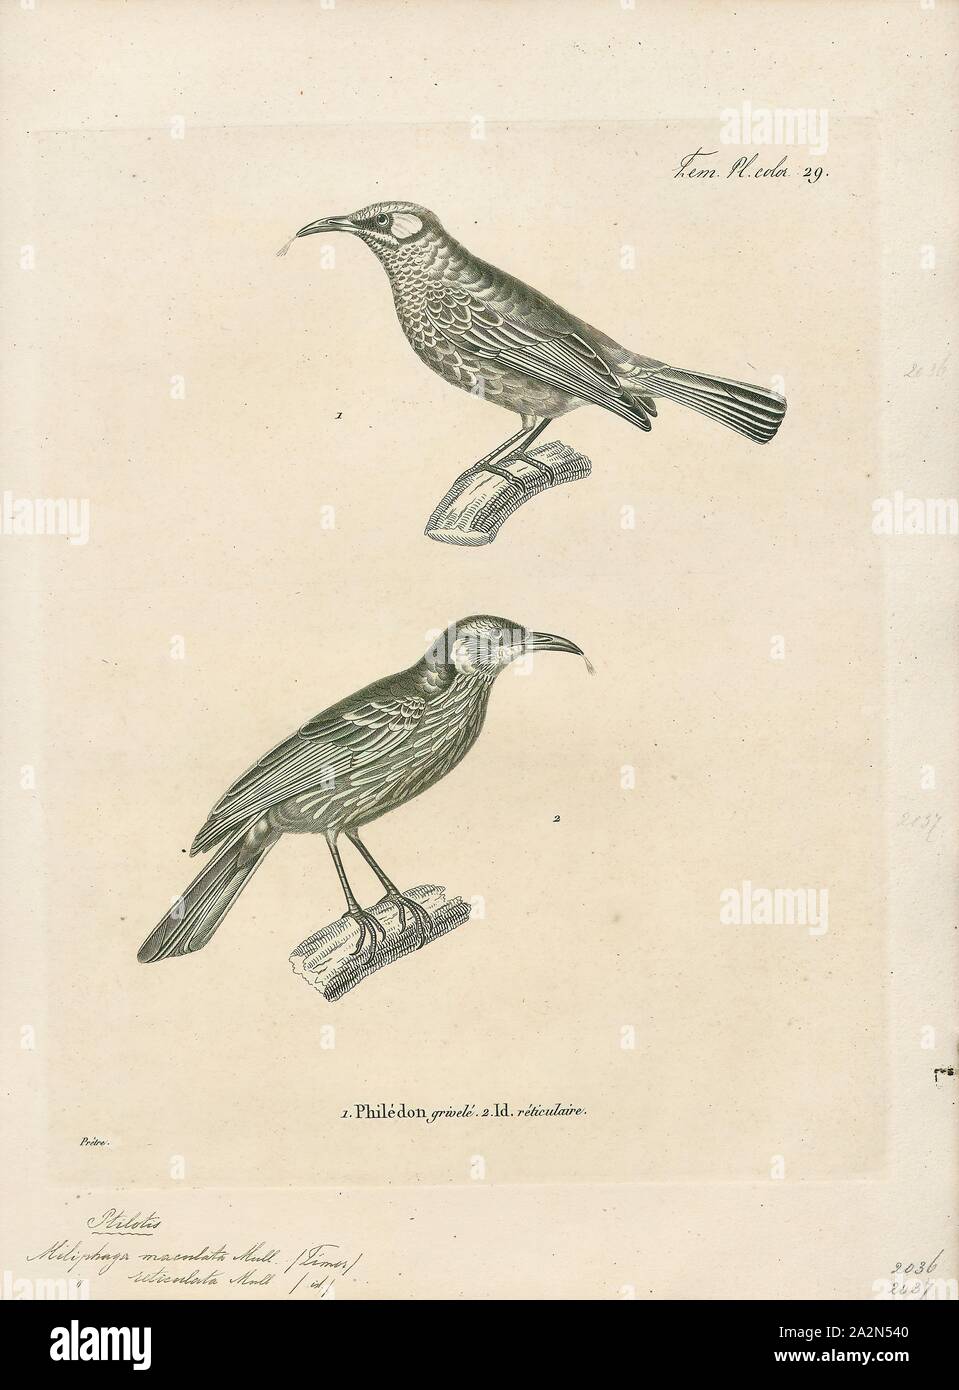 Meliphaga maculata, Print, Meliphaga is a genus of bird in the family Meliphagidae., 1700-1880 Stock Photo